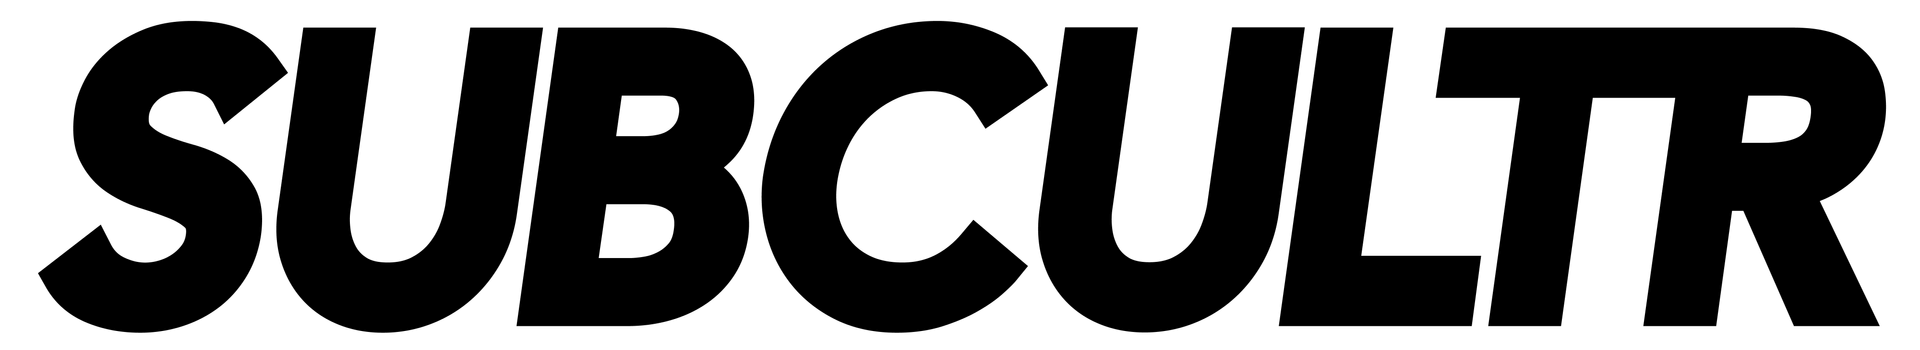 subcultr-logo-black